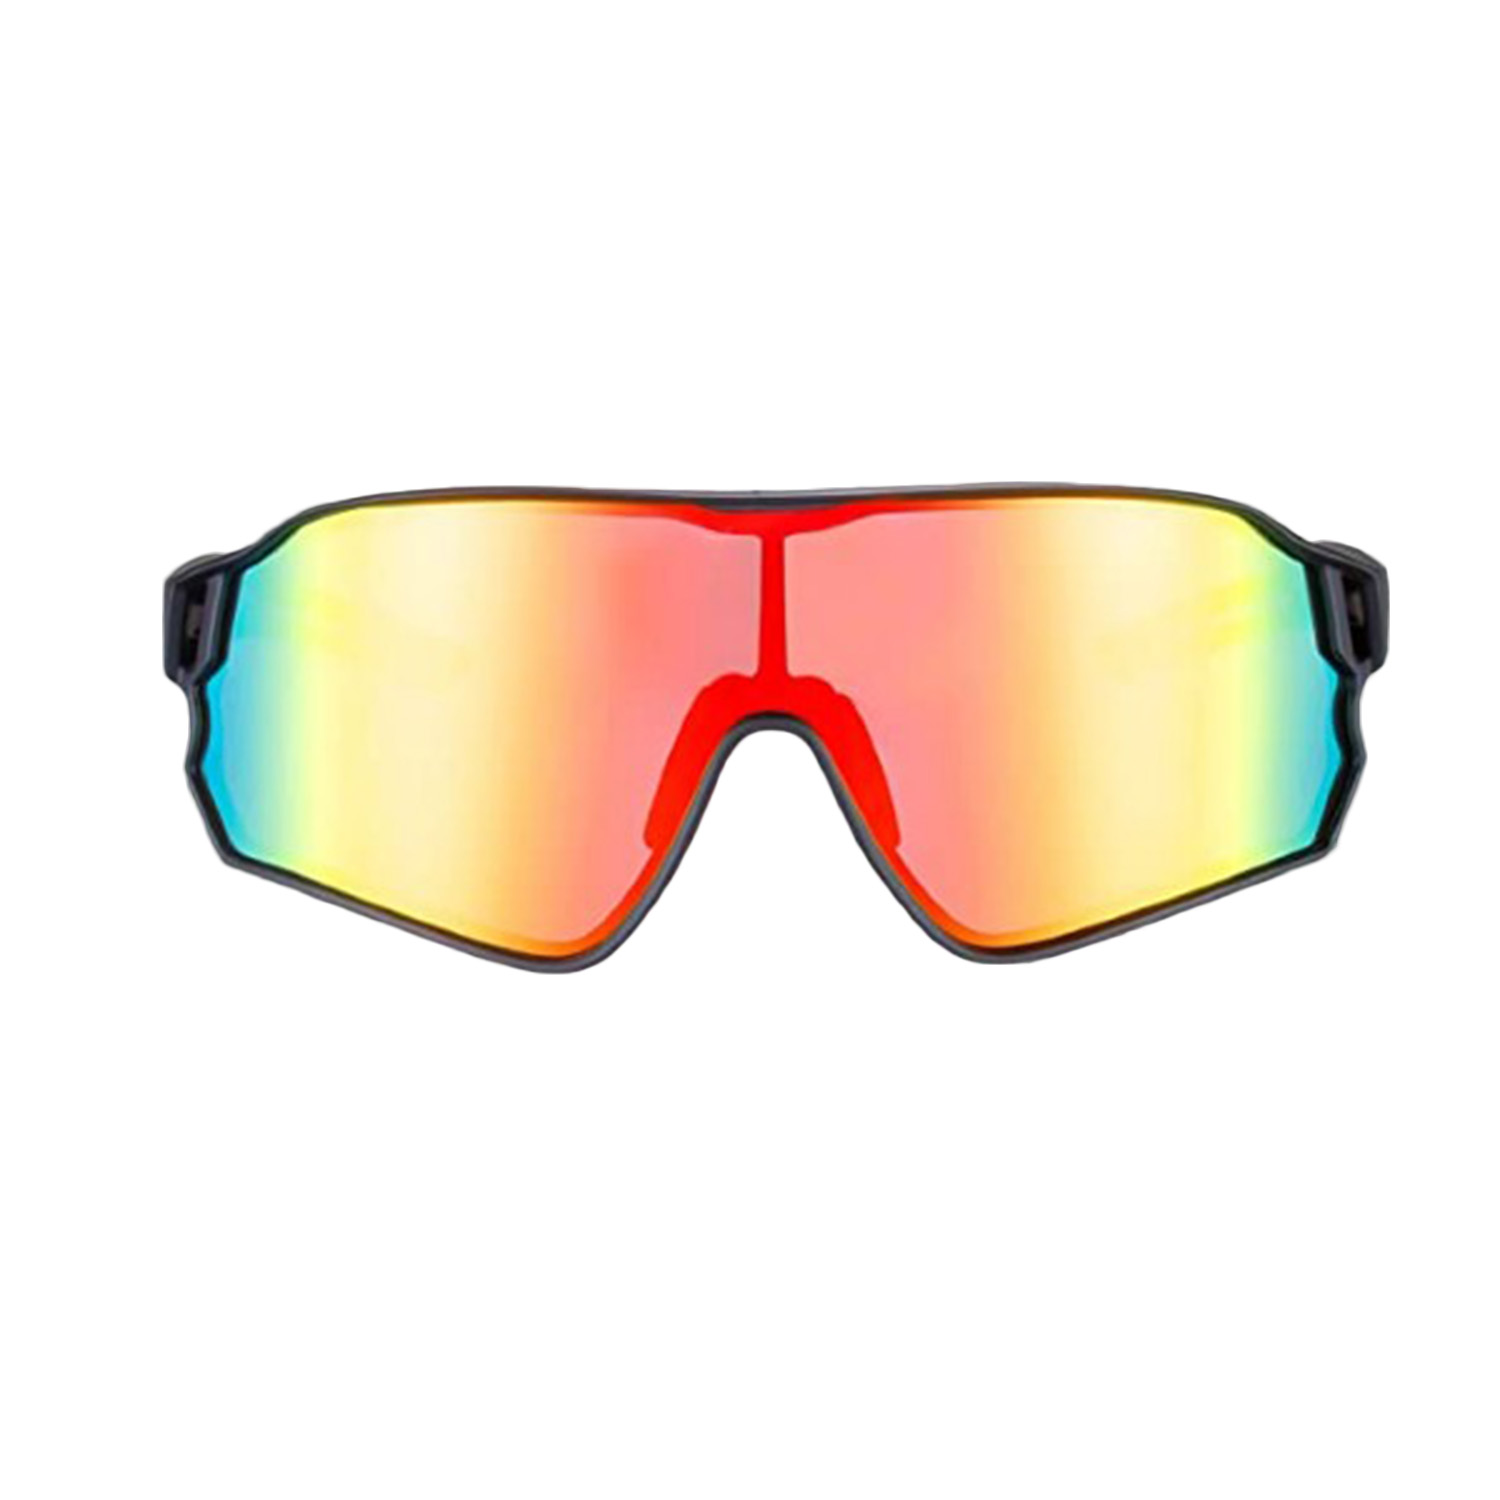 RockBros Polarized Sunglasses Eyewear - Black